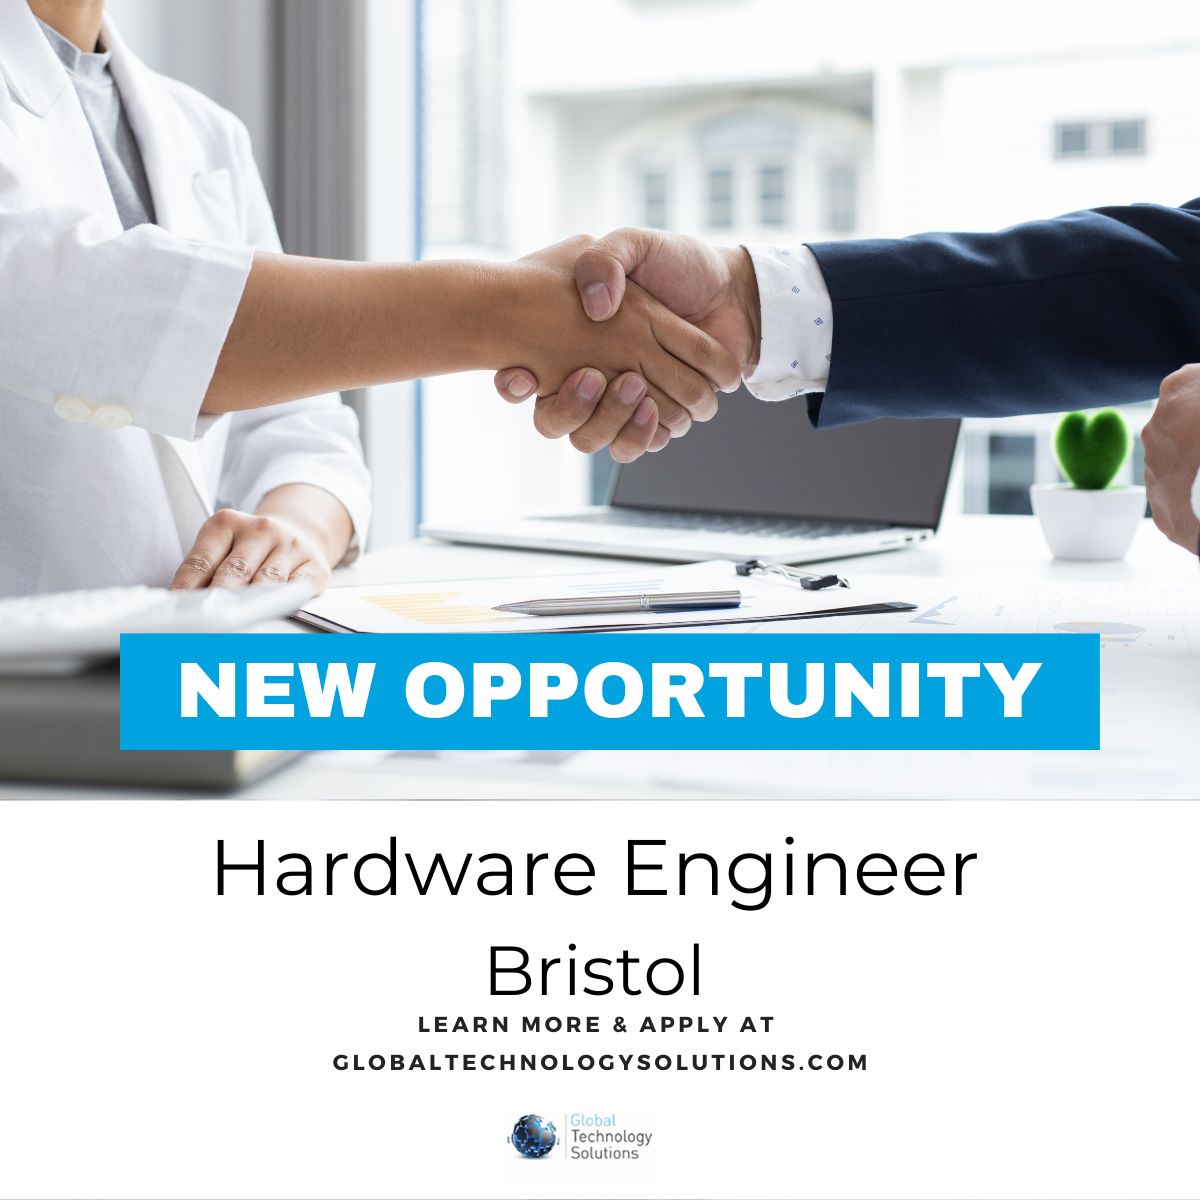 IT Jobs in Bristol interview for Hardware Engineer.